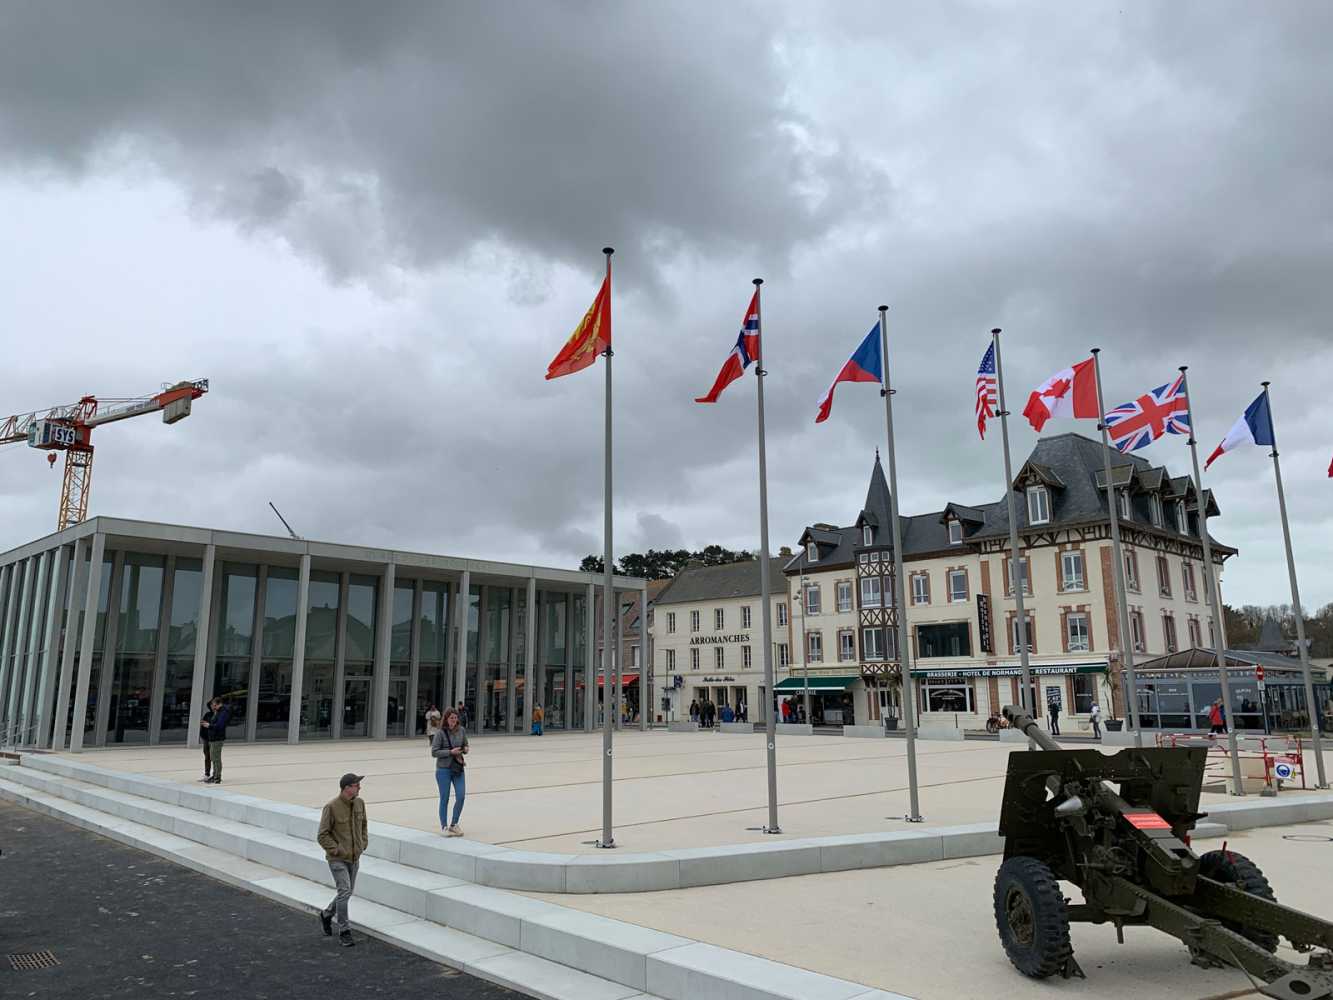 The D-Day Museum at Arromanches-les-Bains